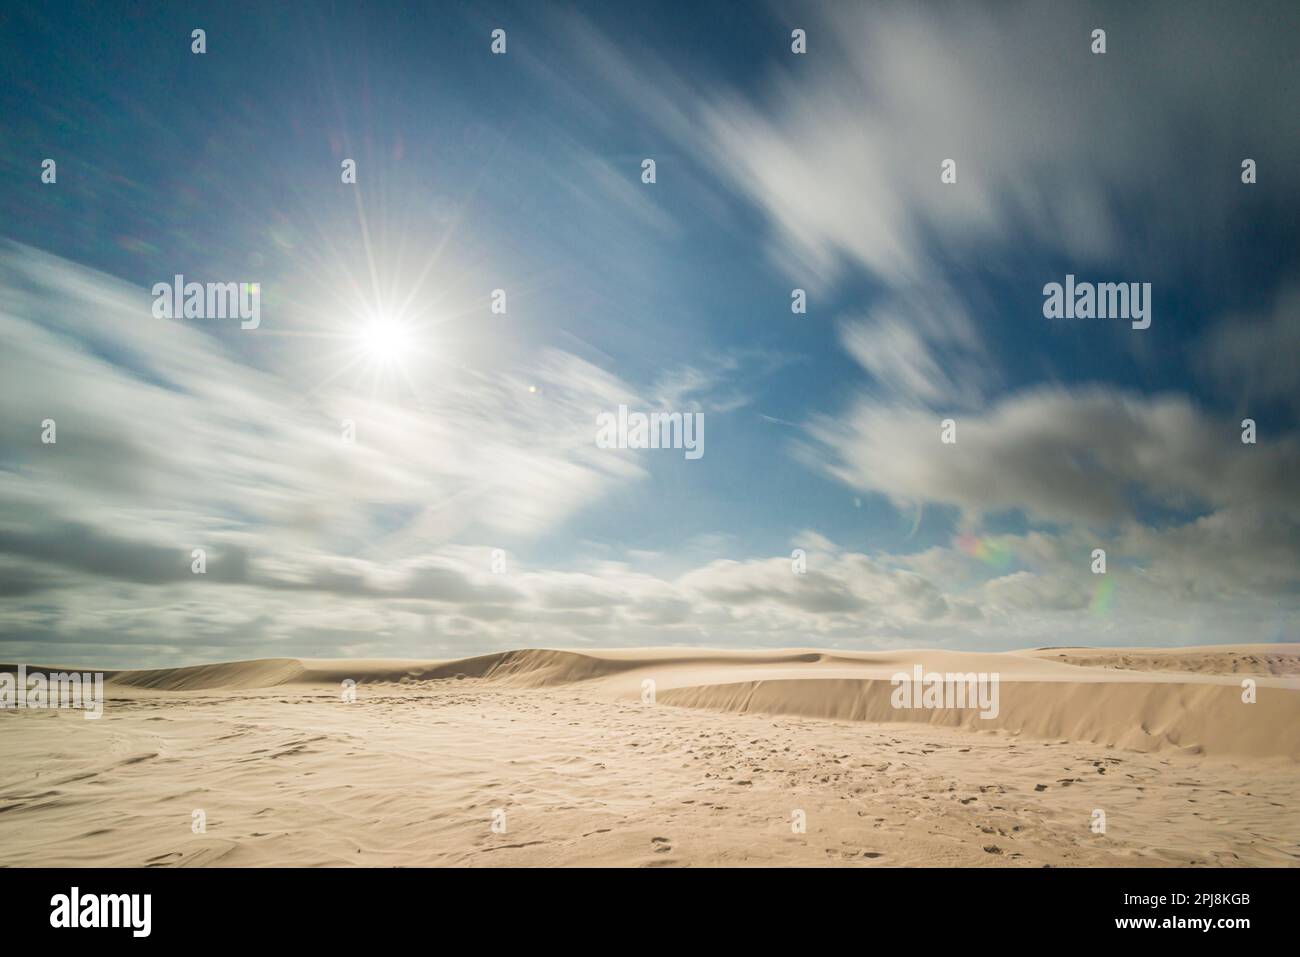 Windi day over sand dunes Stock Photo